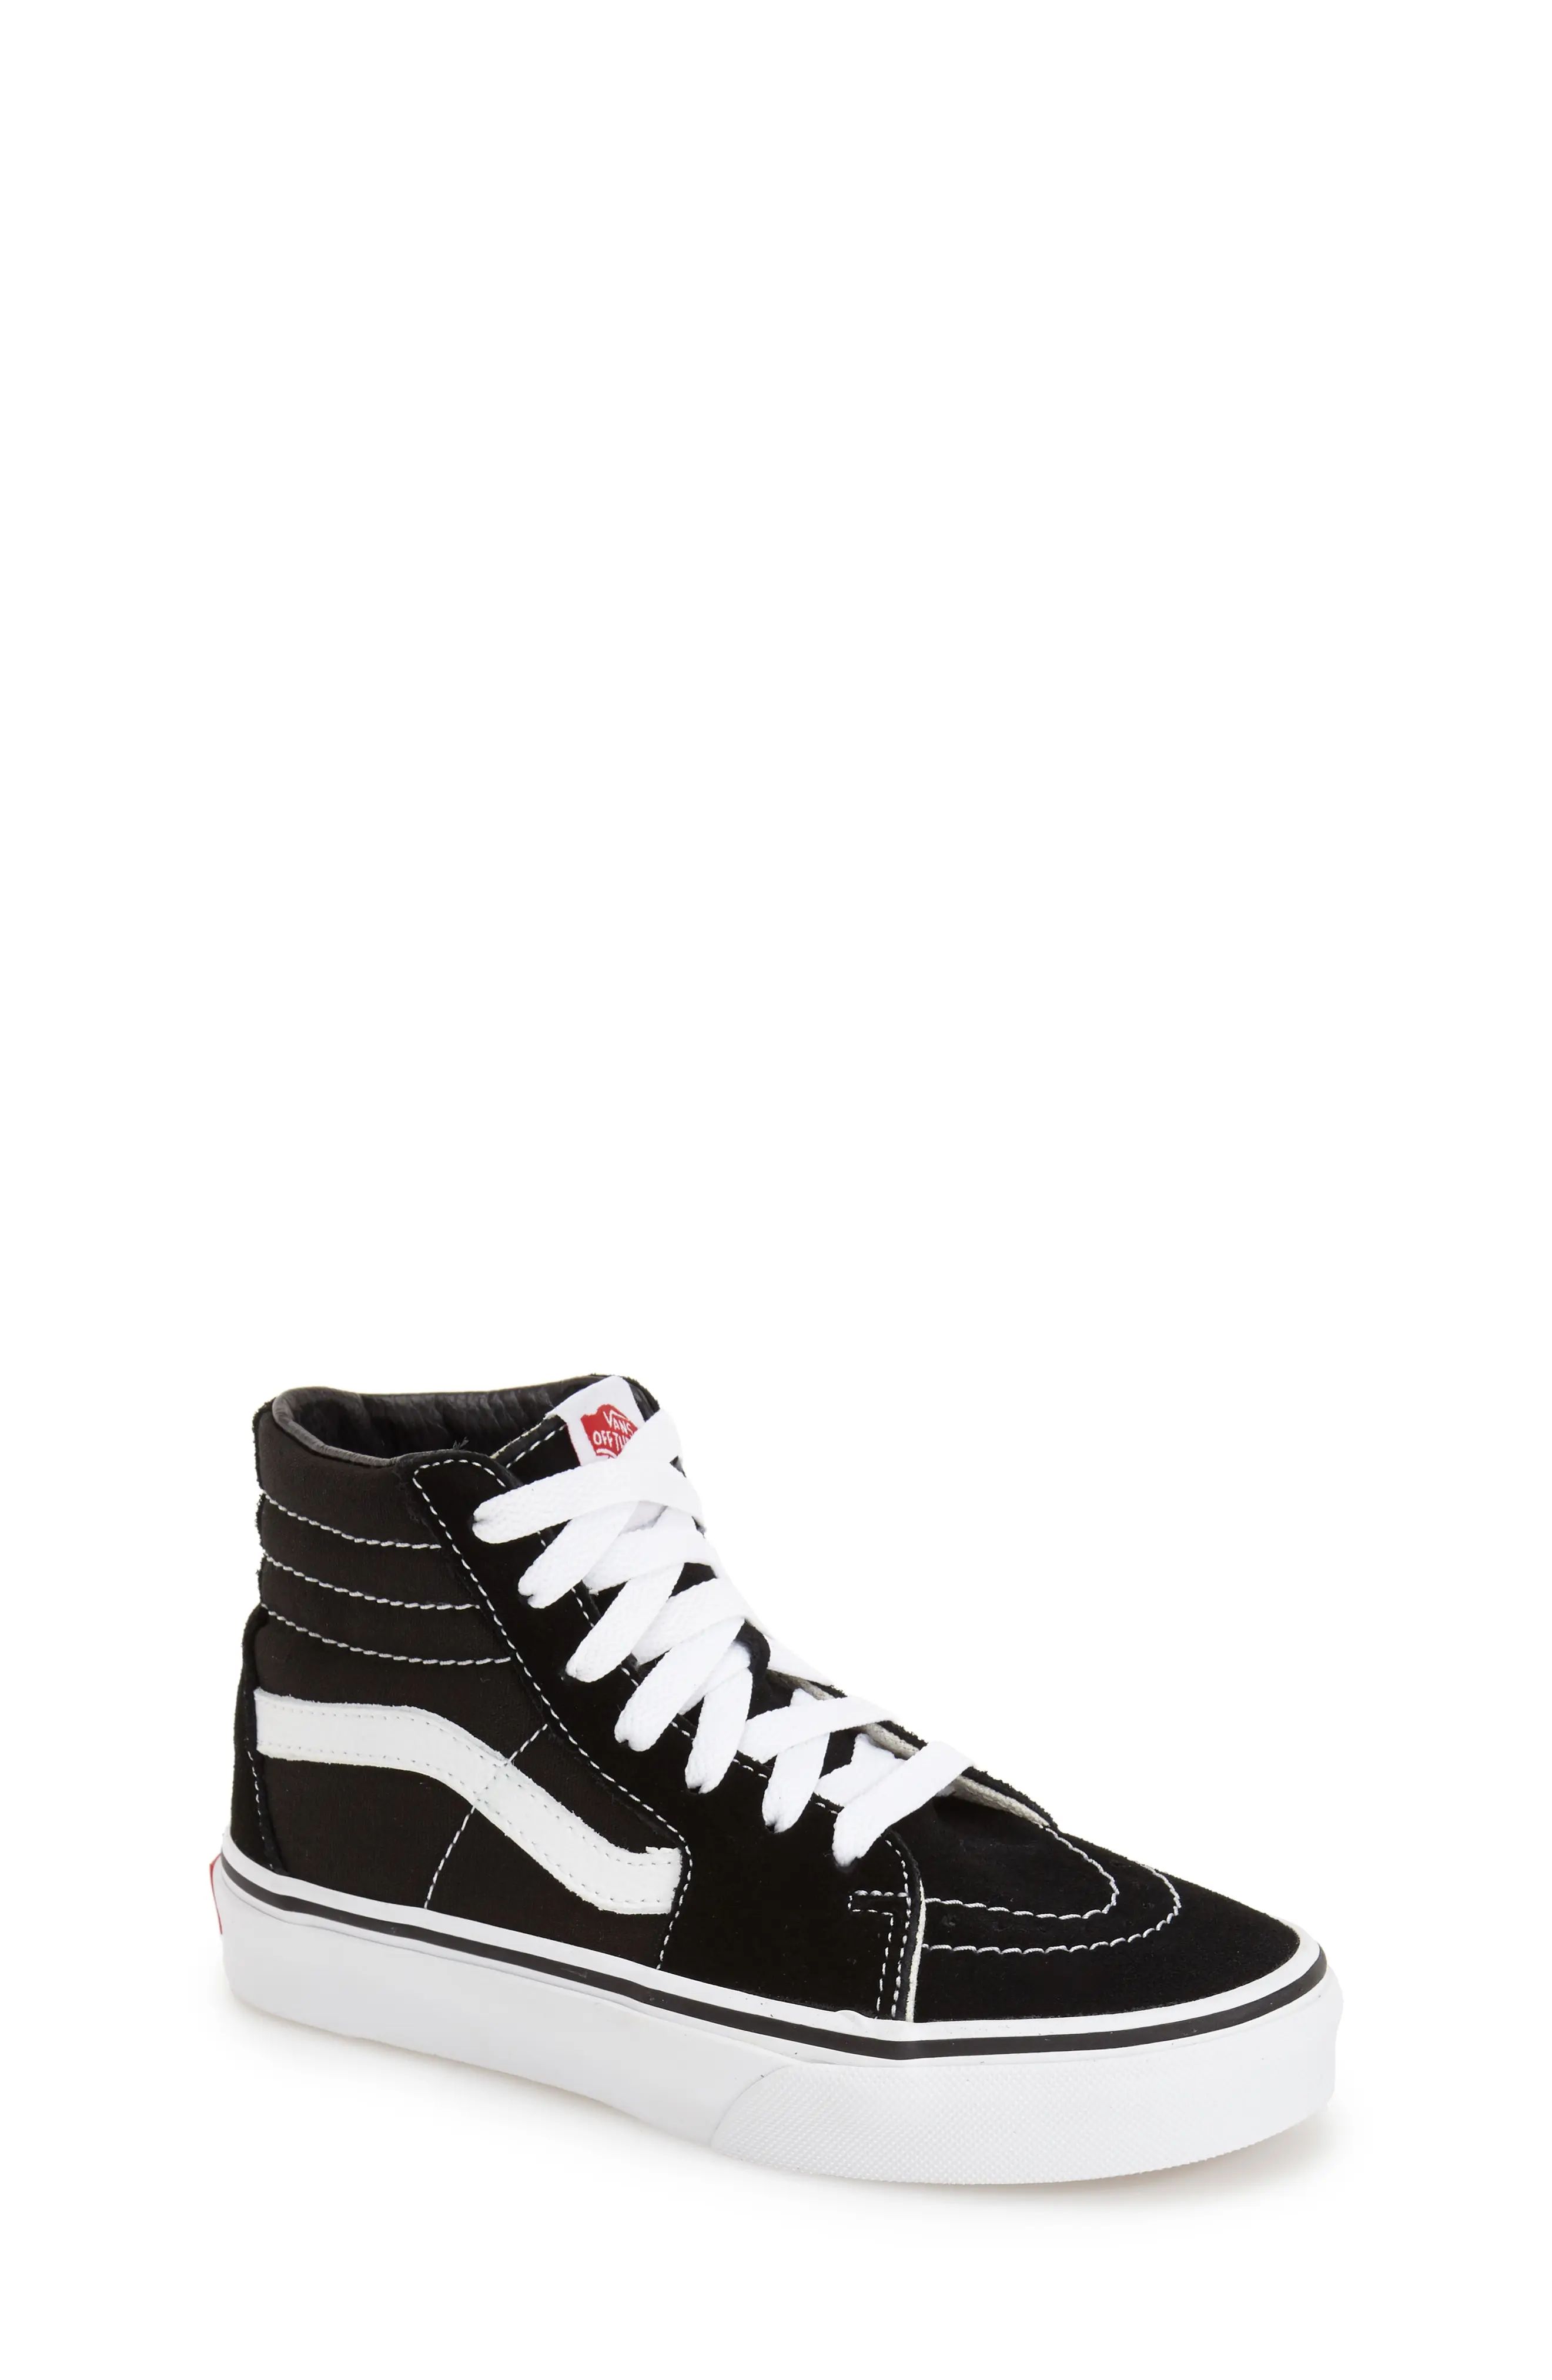 Vans SK8-Hi Sneaker, Size 10 Women's in Black/black/white at Nordstrom | Nordstrom